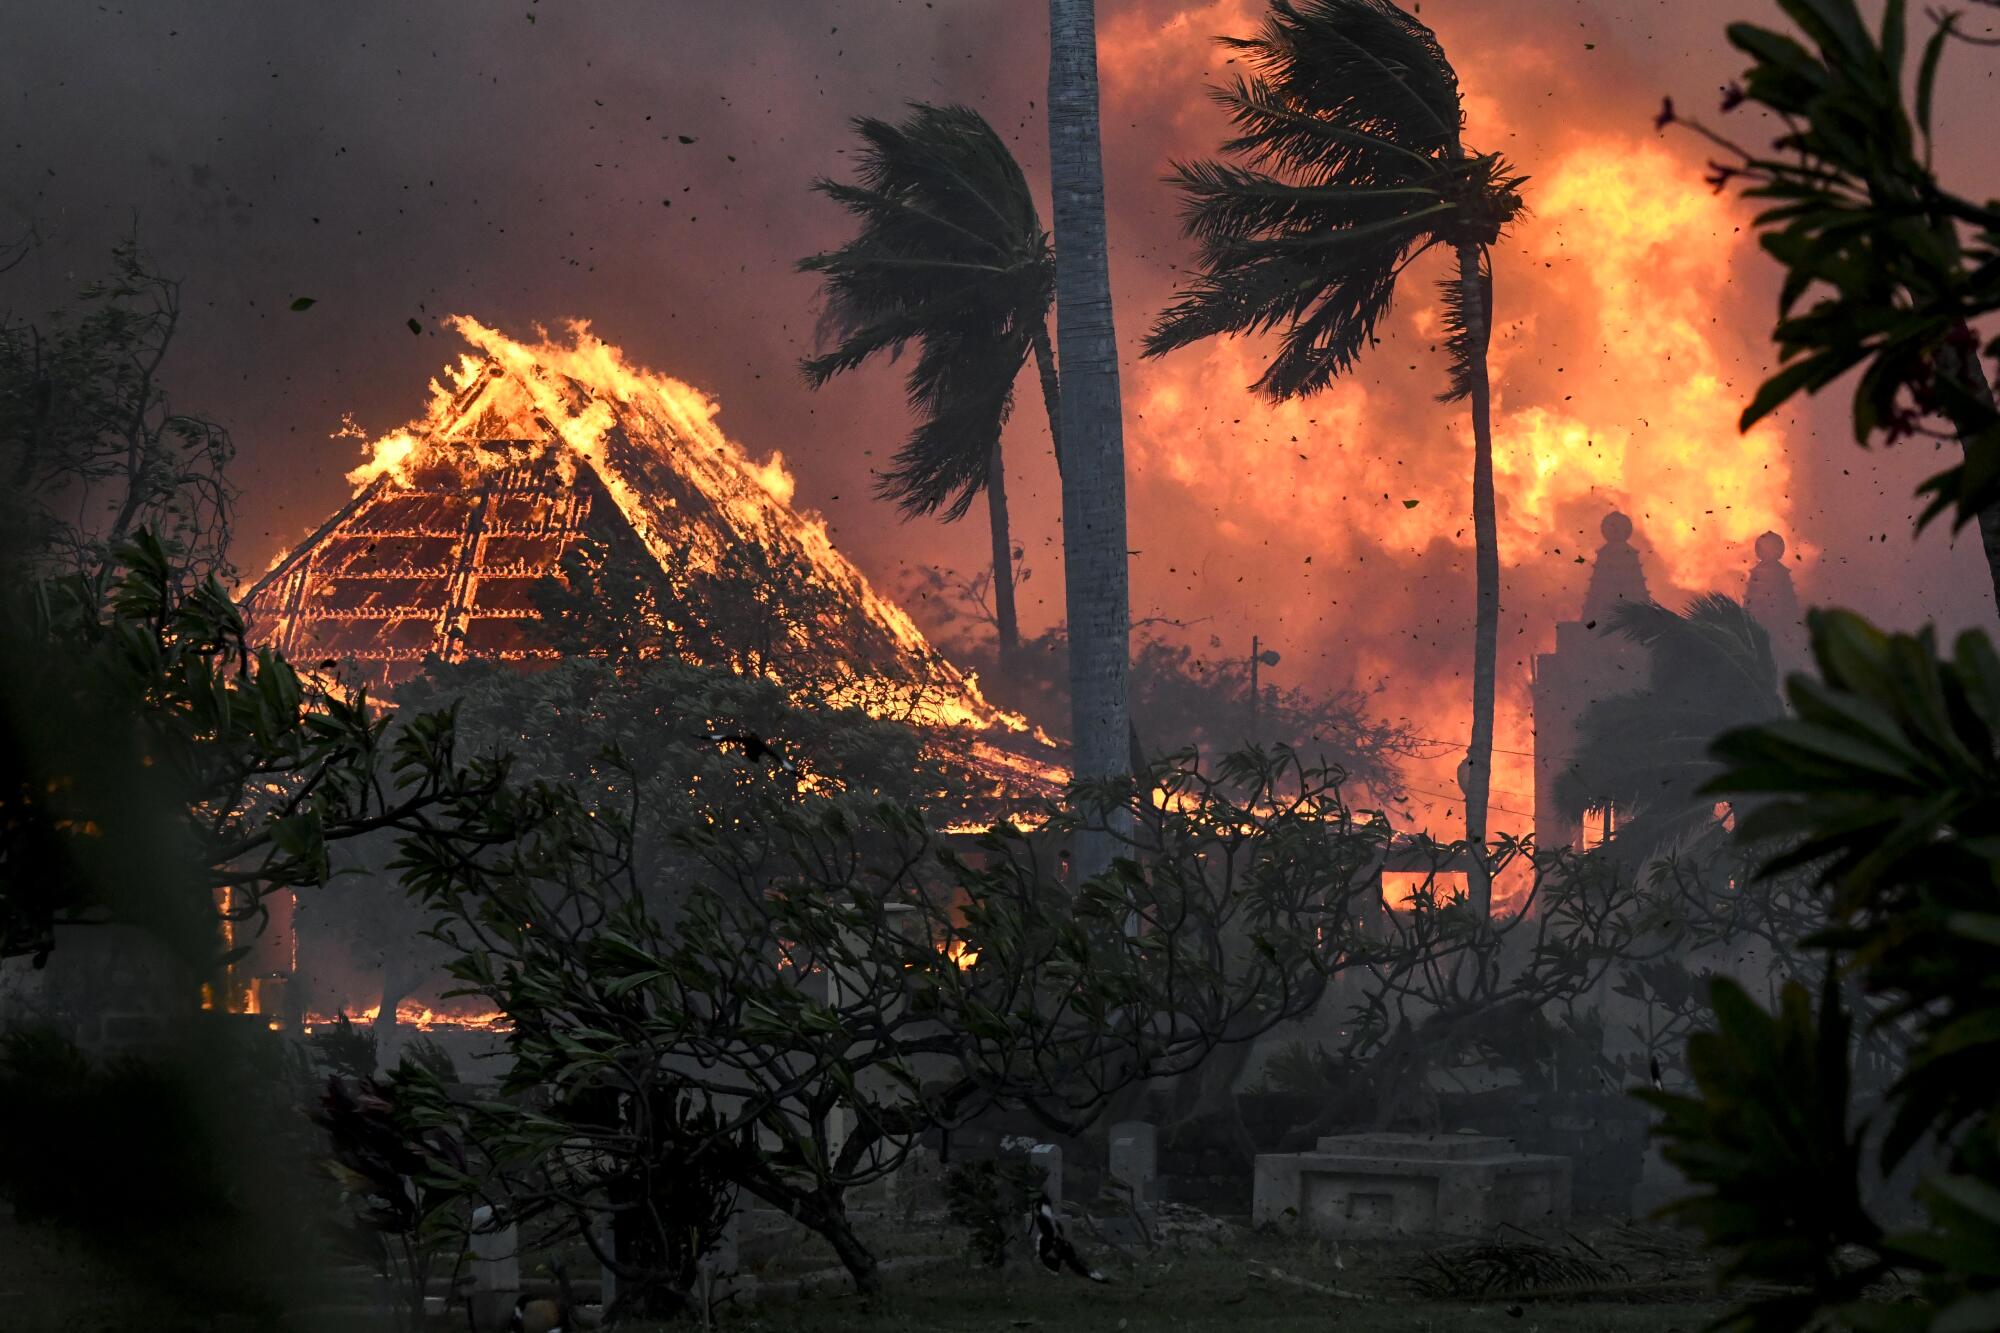 The hall of historic Waiola Church in Lahaina and nearby Lahaina Hongwanji Mission are engulfed in flames amid smoke.